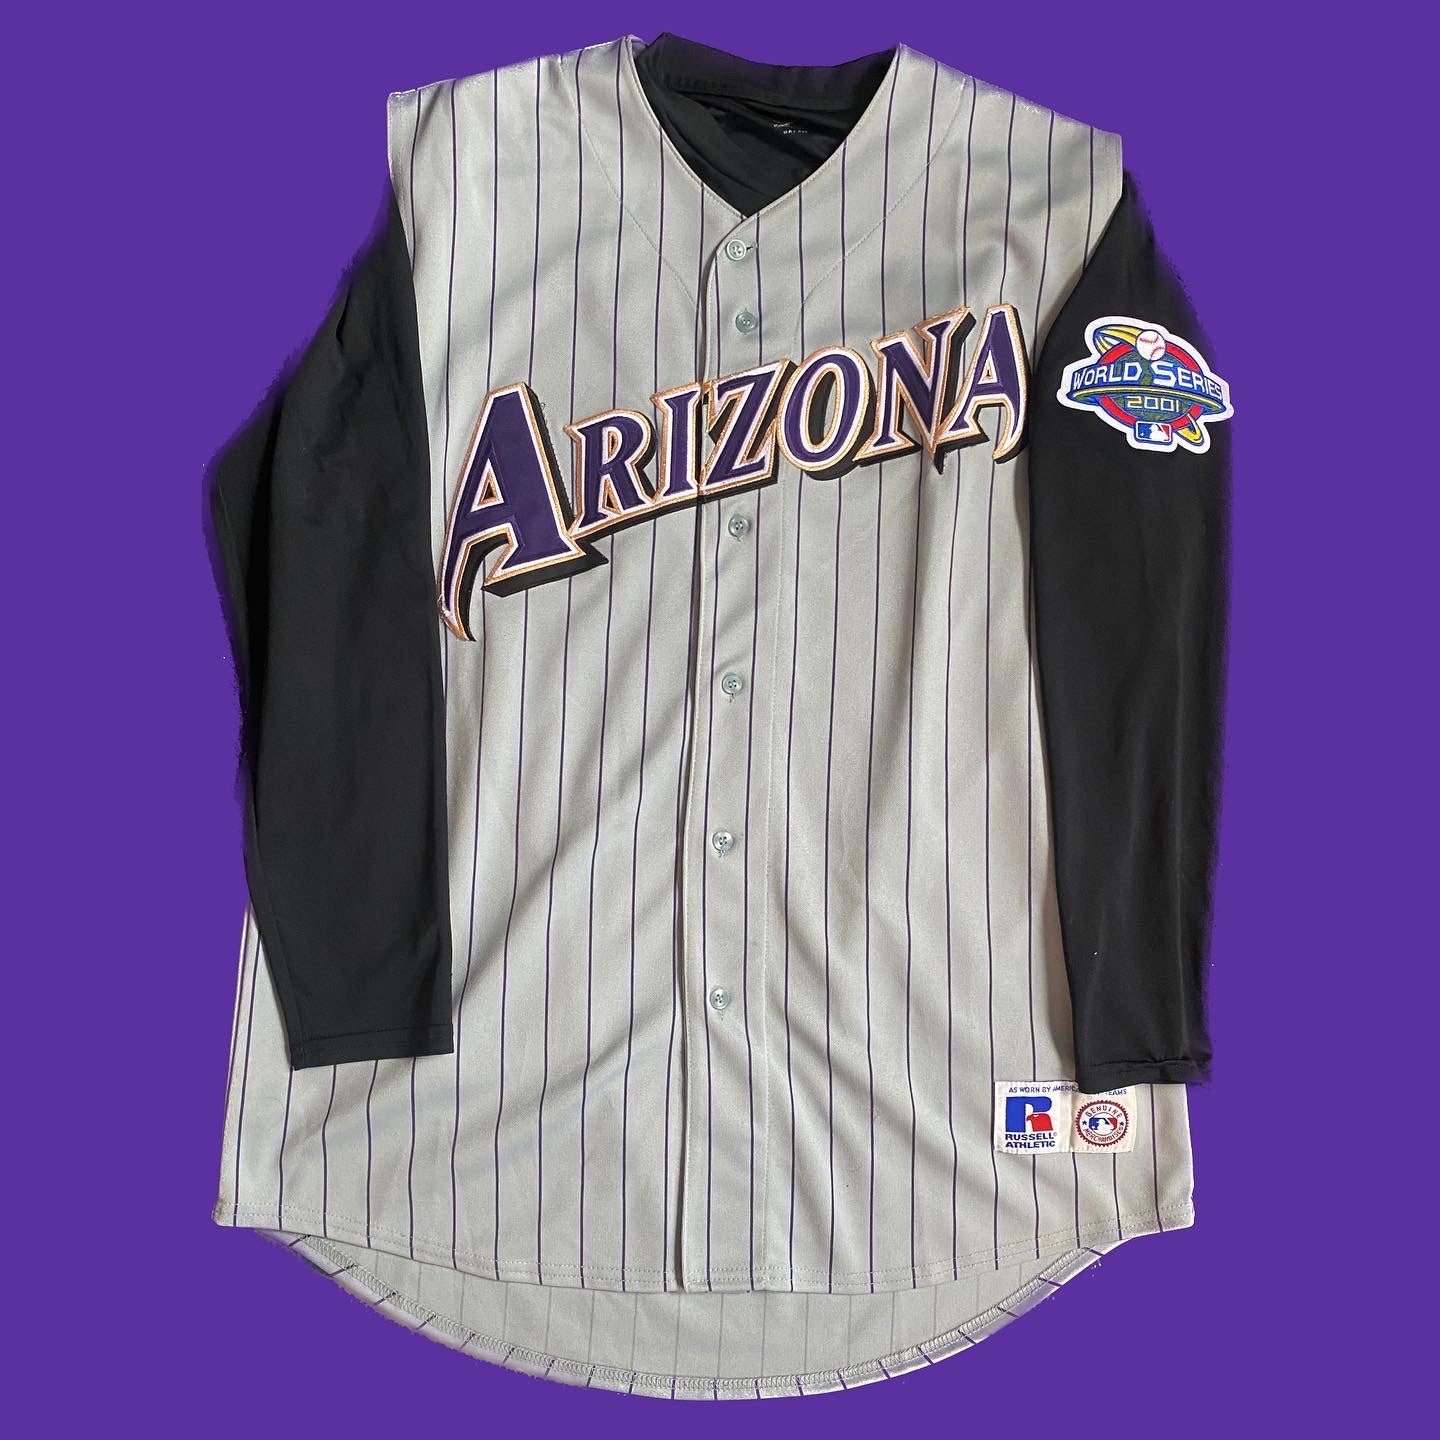 Arizona Diamondbacks 2001 uniform artwork, This is a highly…